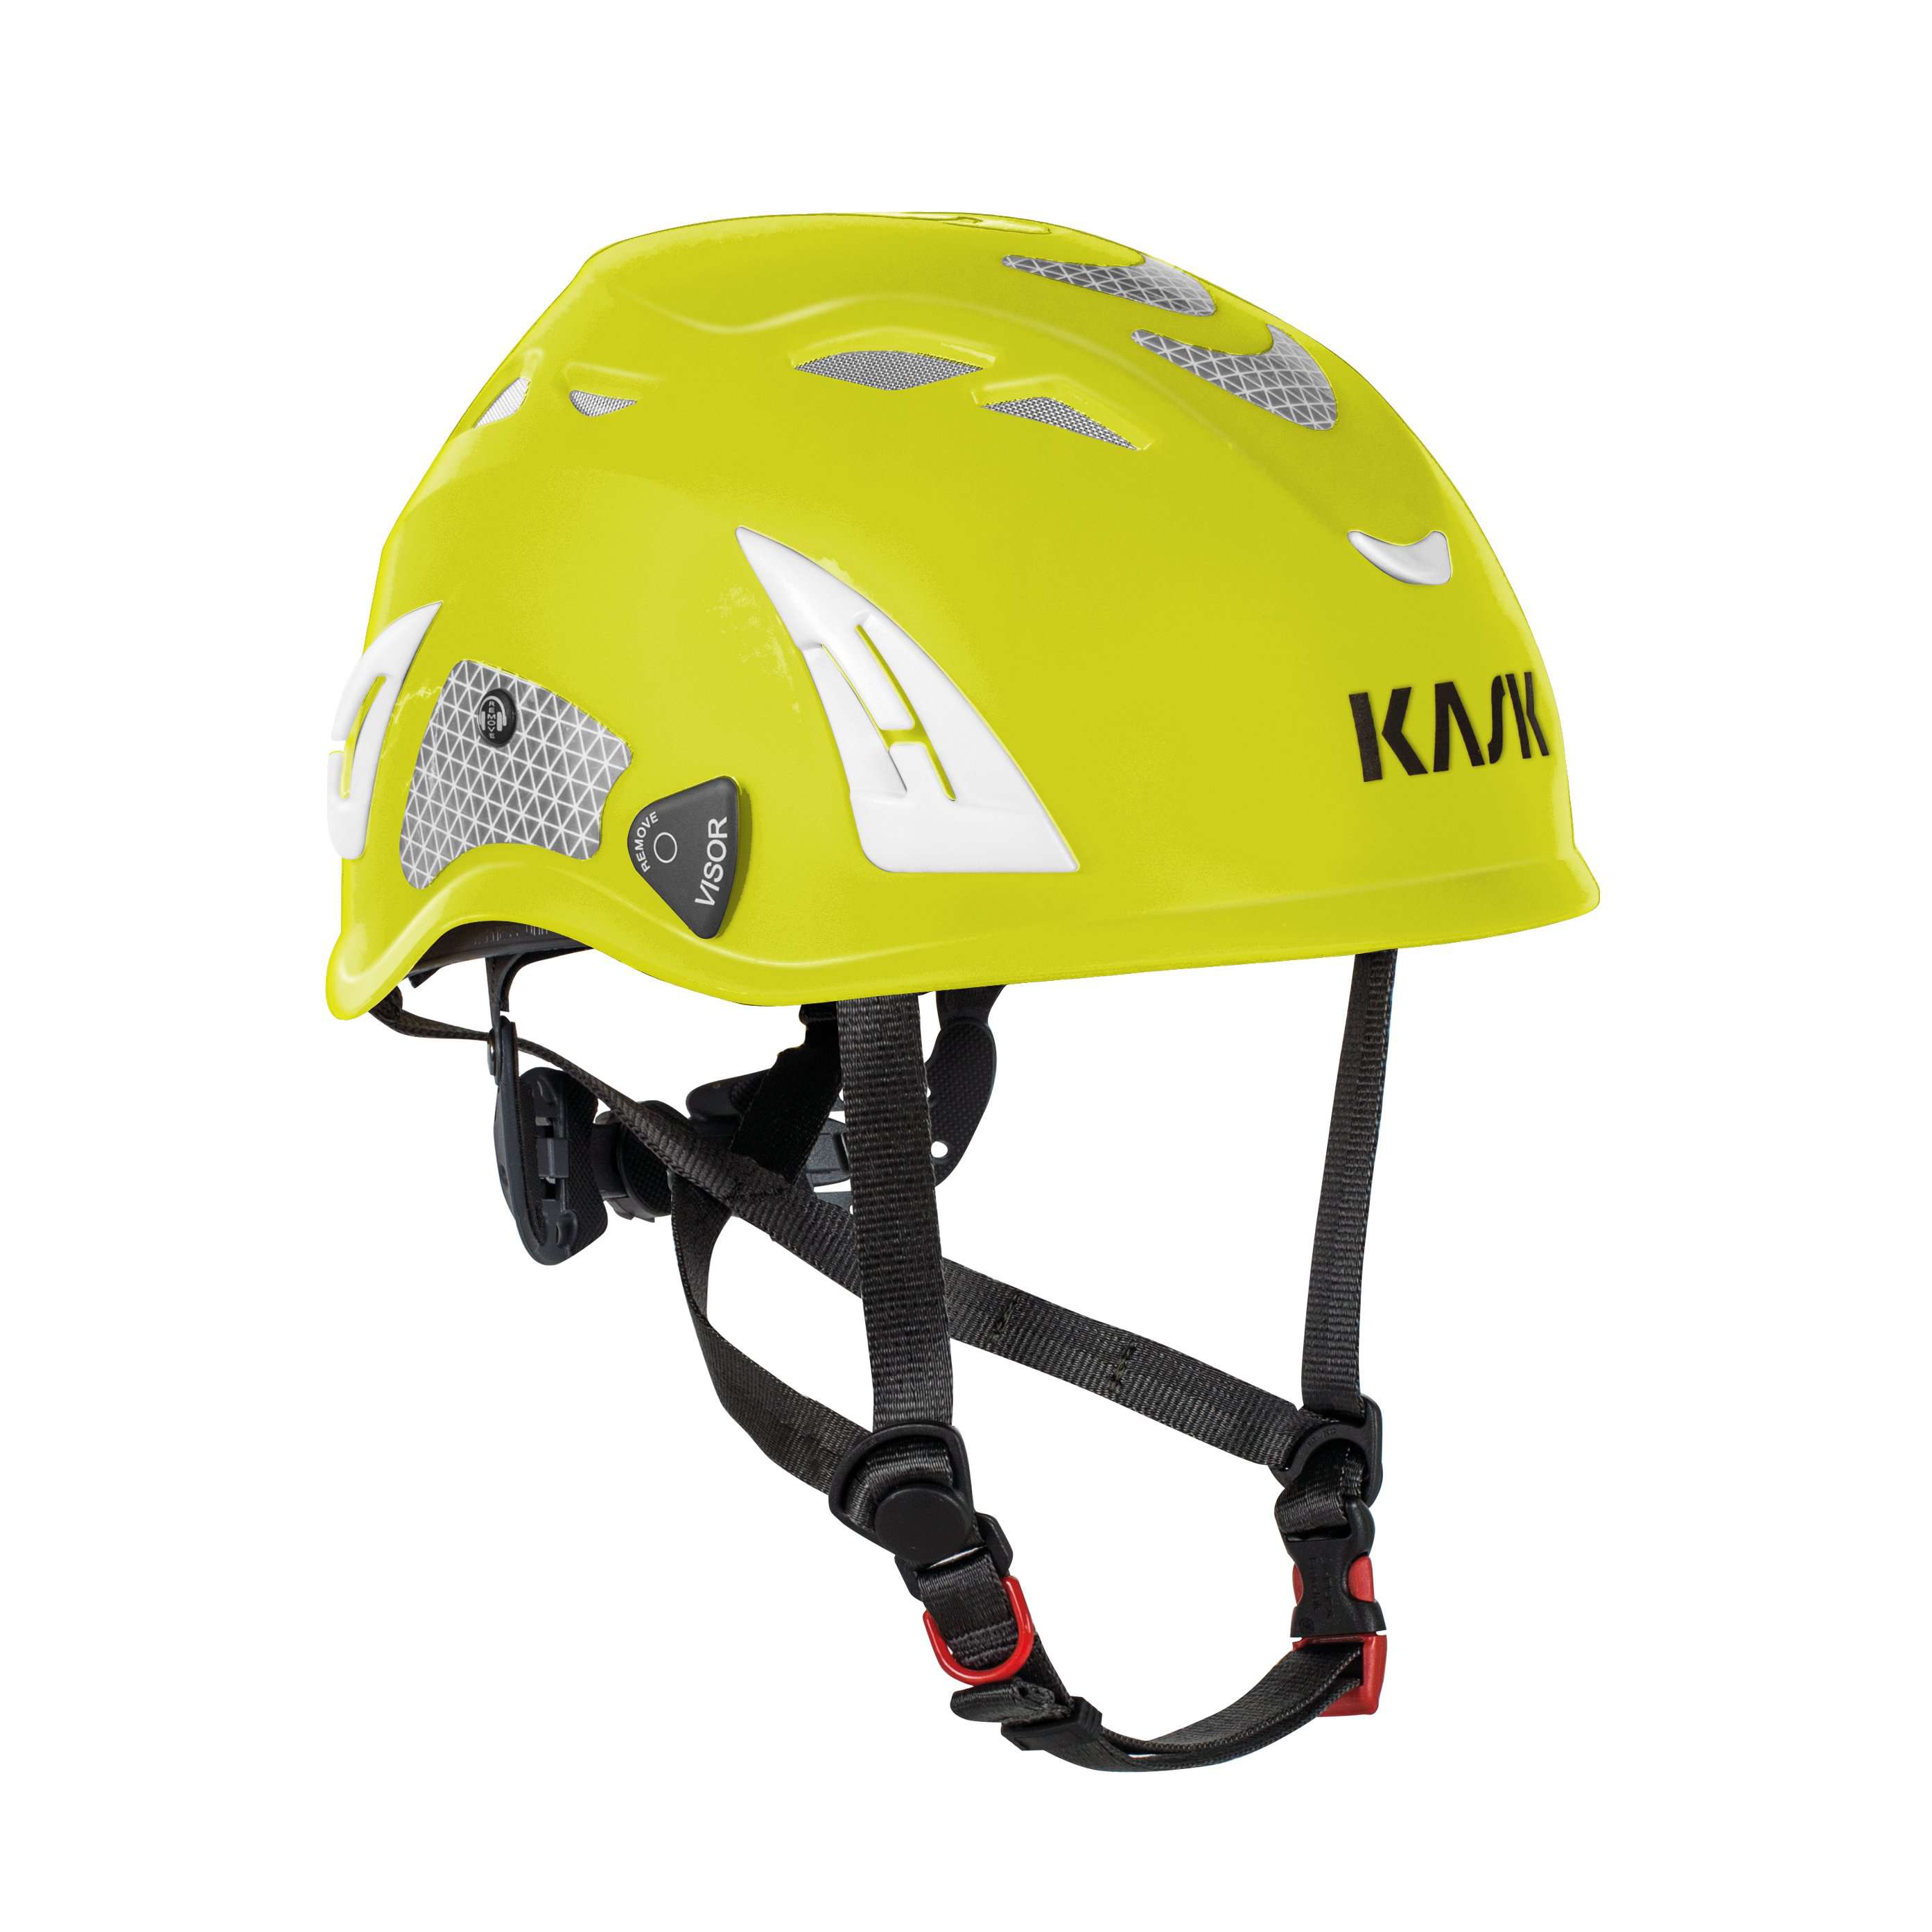 AHE00006 KASK Super Plasma PL HV Helmet EN12492